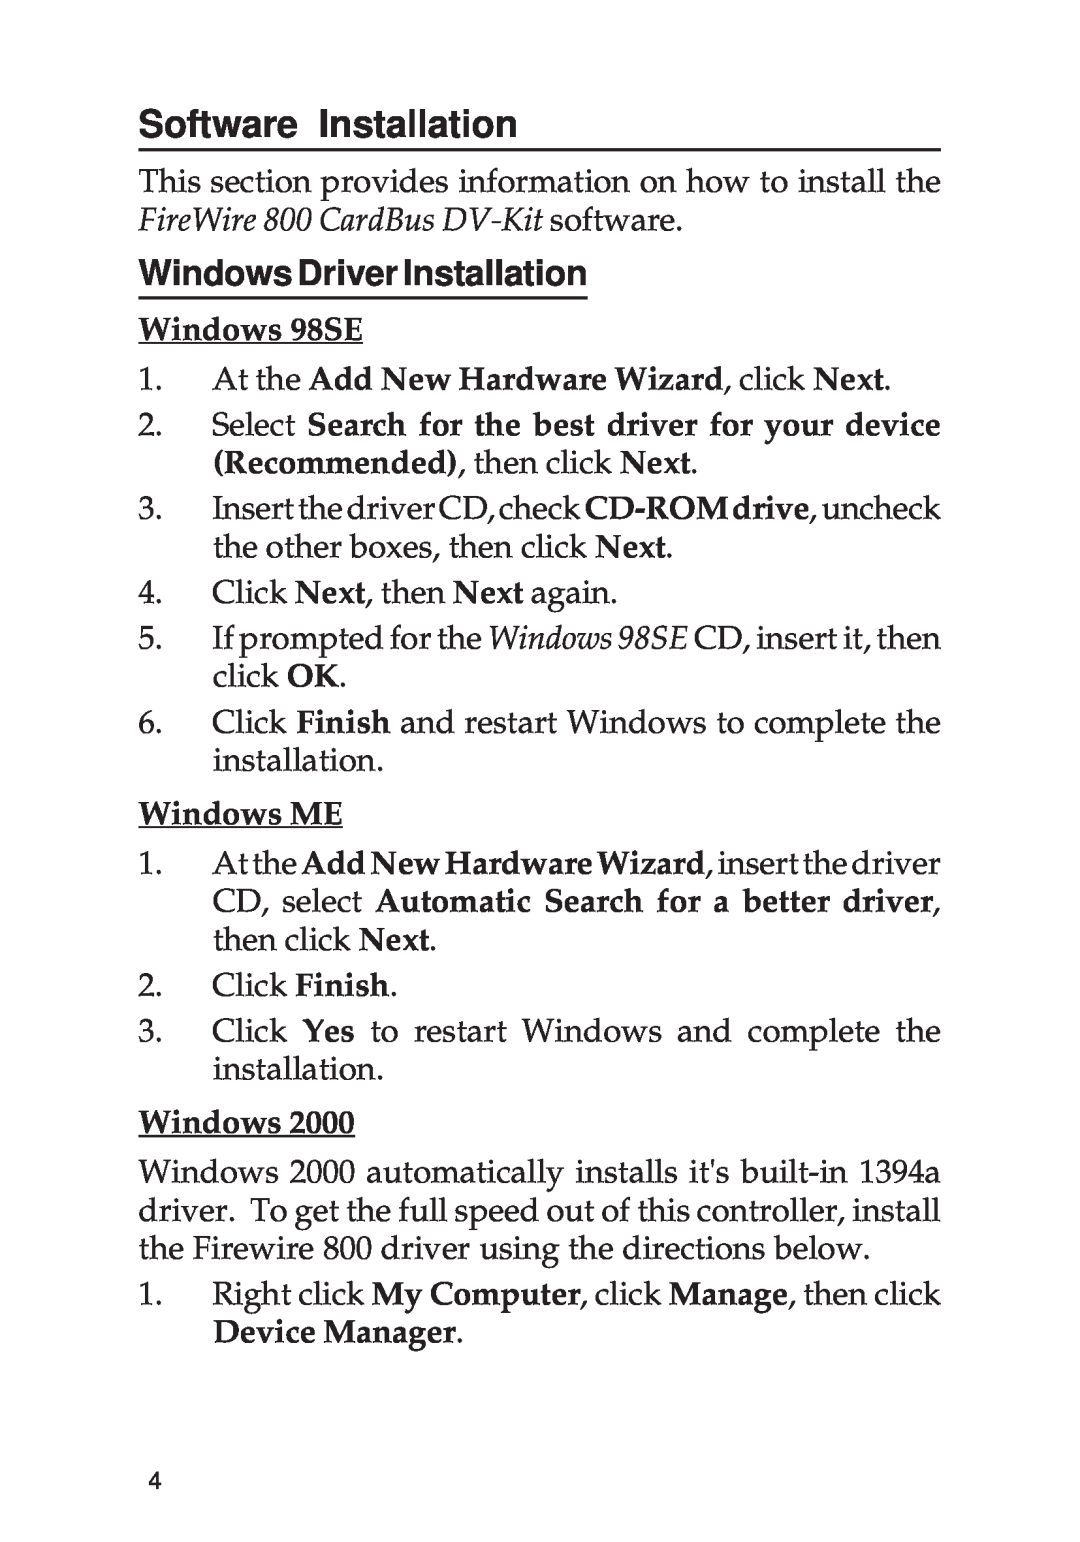 SIIG 700 Software Installation, Windows Driver Installation, Windows 98SE 1. At the Add New Hardware Wizard, click Next 